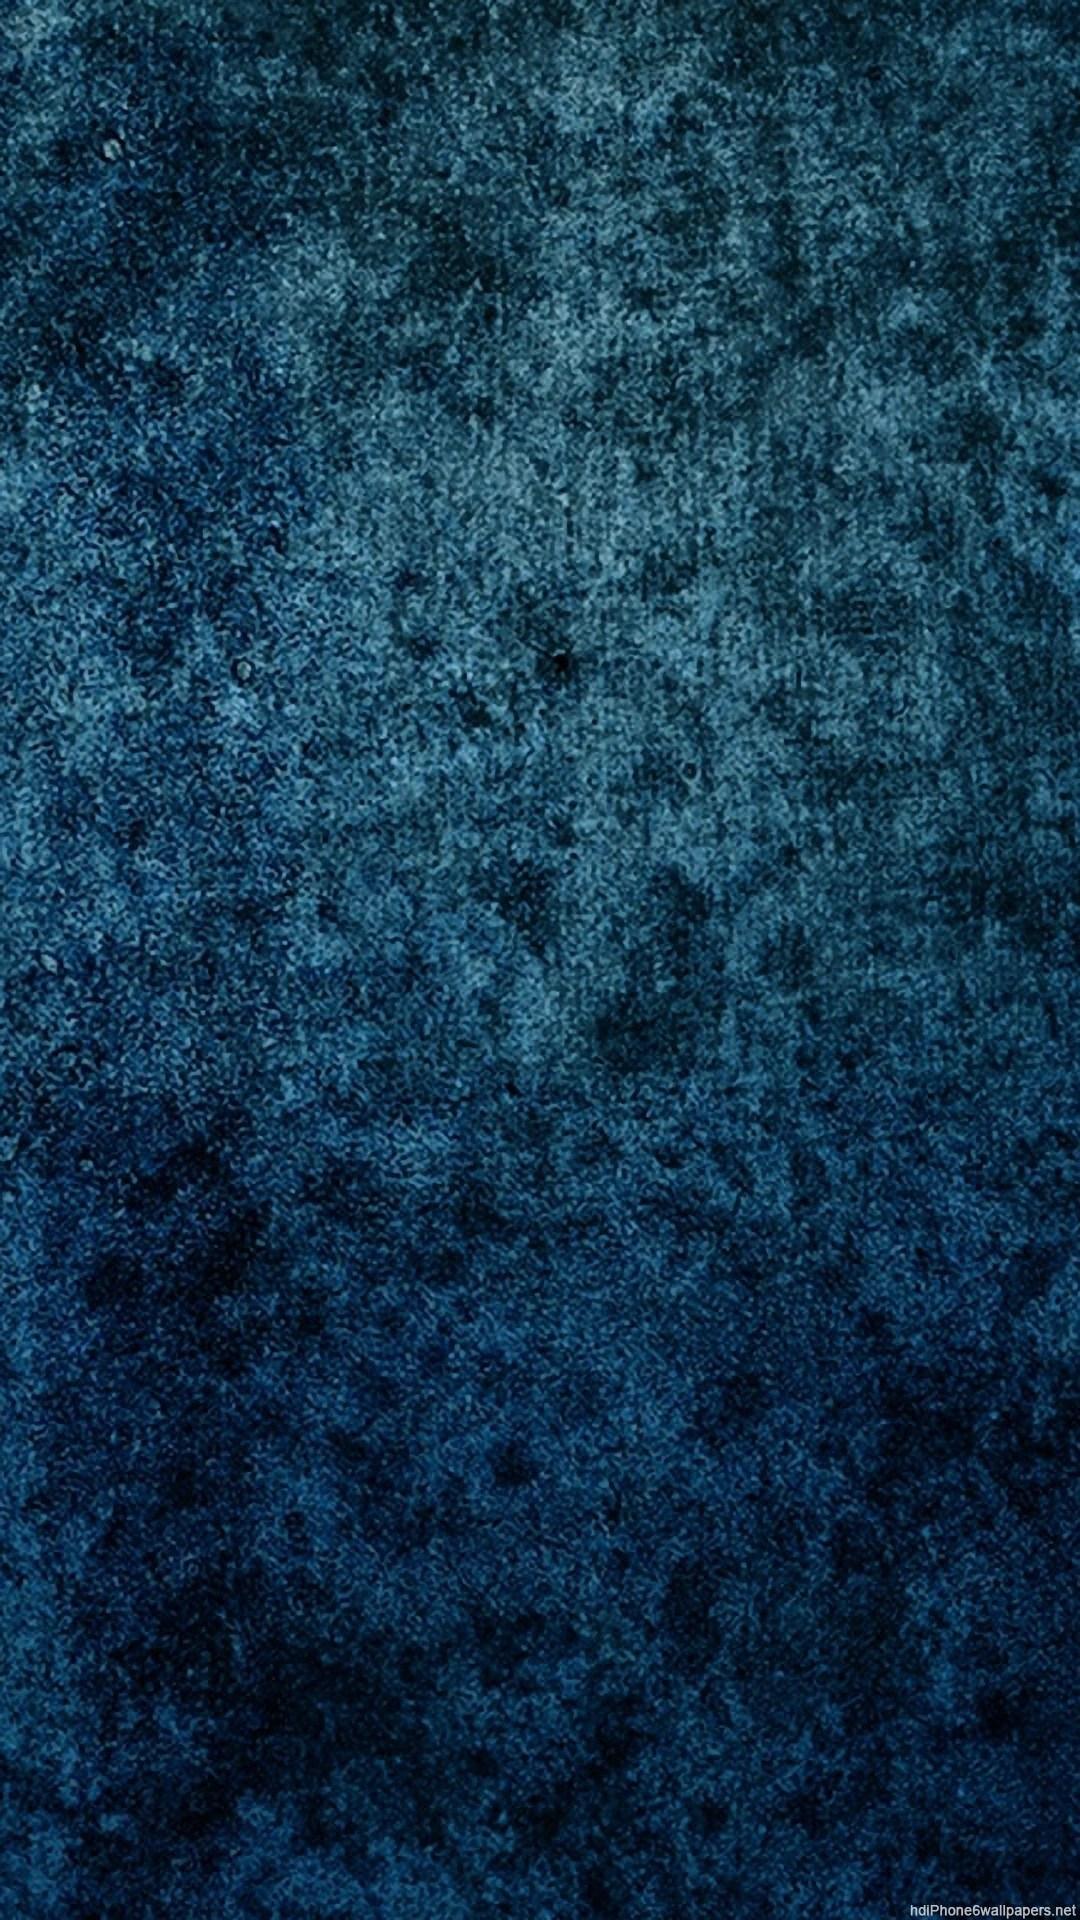 hd wallpaper für iphone 6 1080p,blau,aqua,türkis,grün,blaugrün